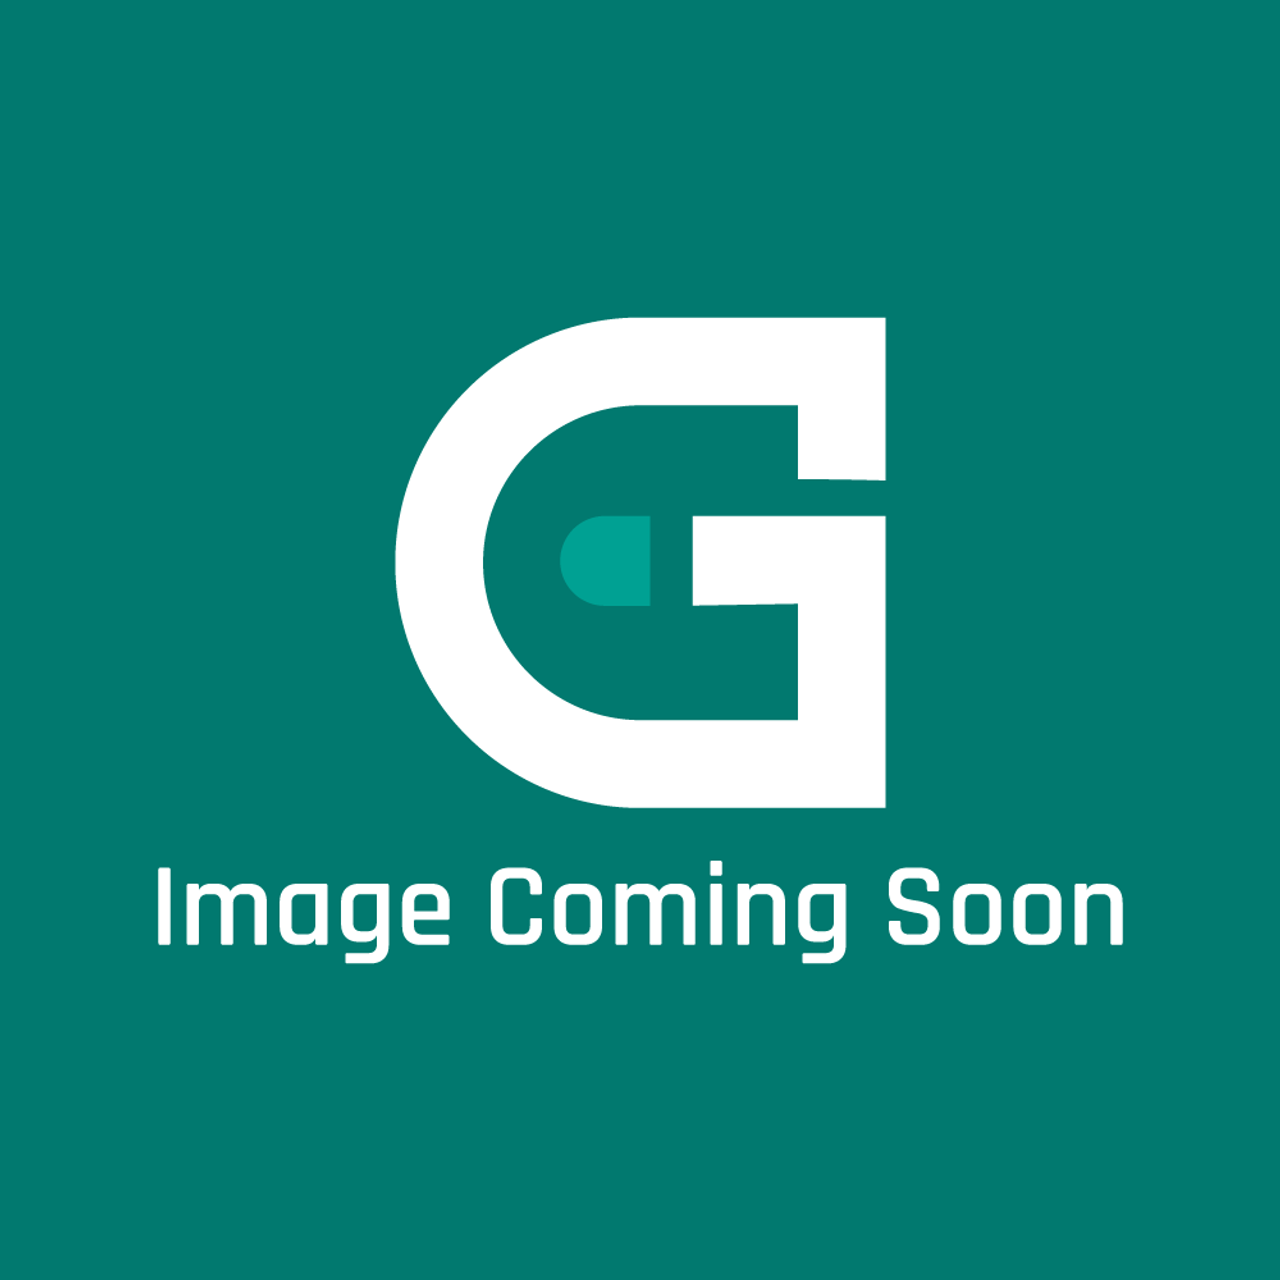 GE Appliances 10B78 - 610587-11 Module Kit - Image Coming Soon!